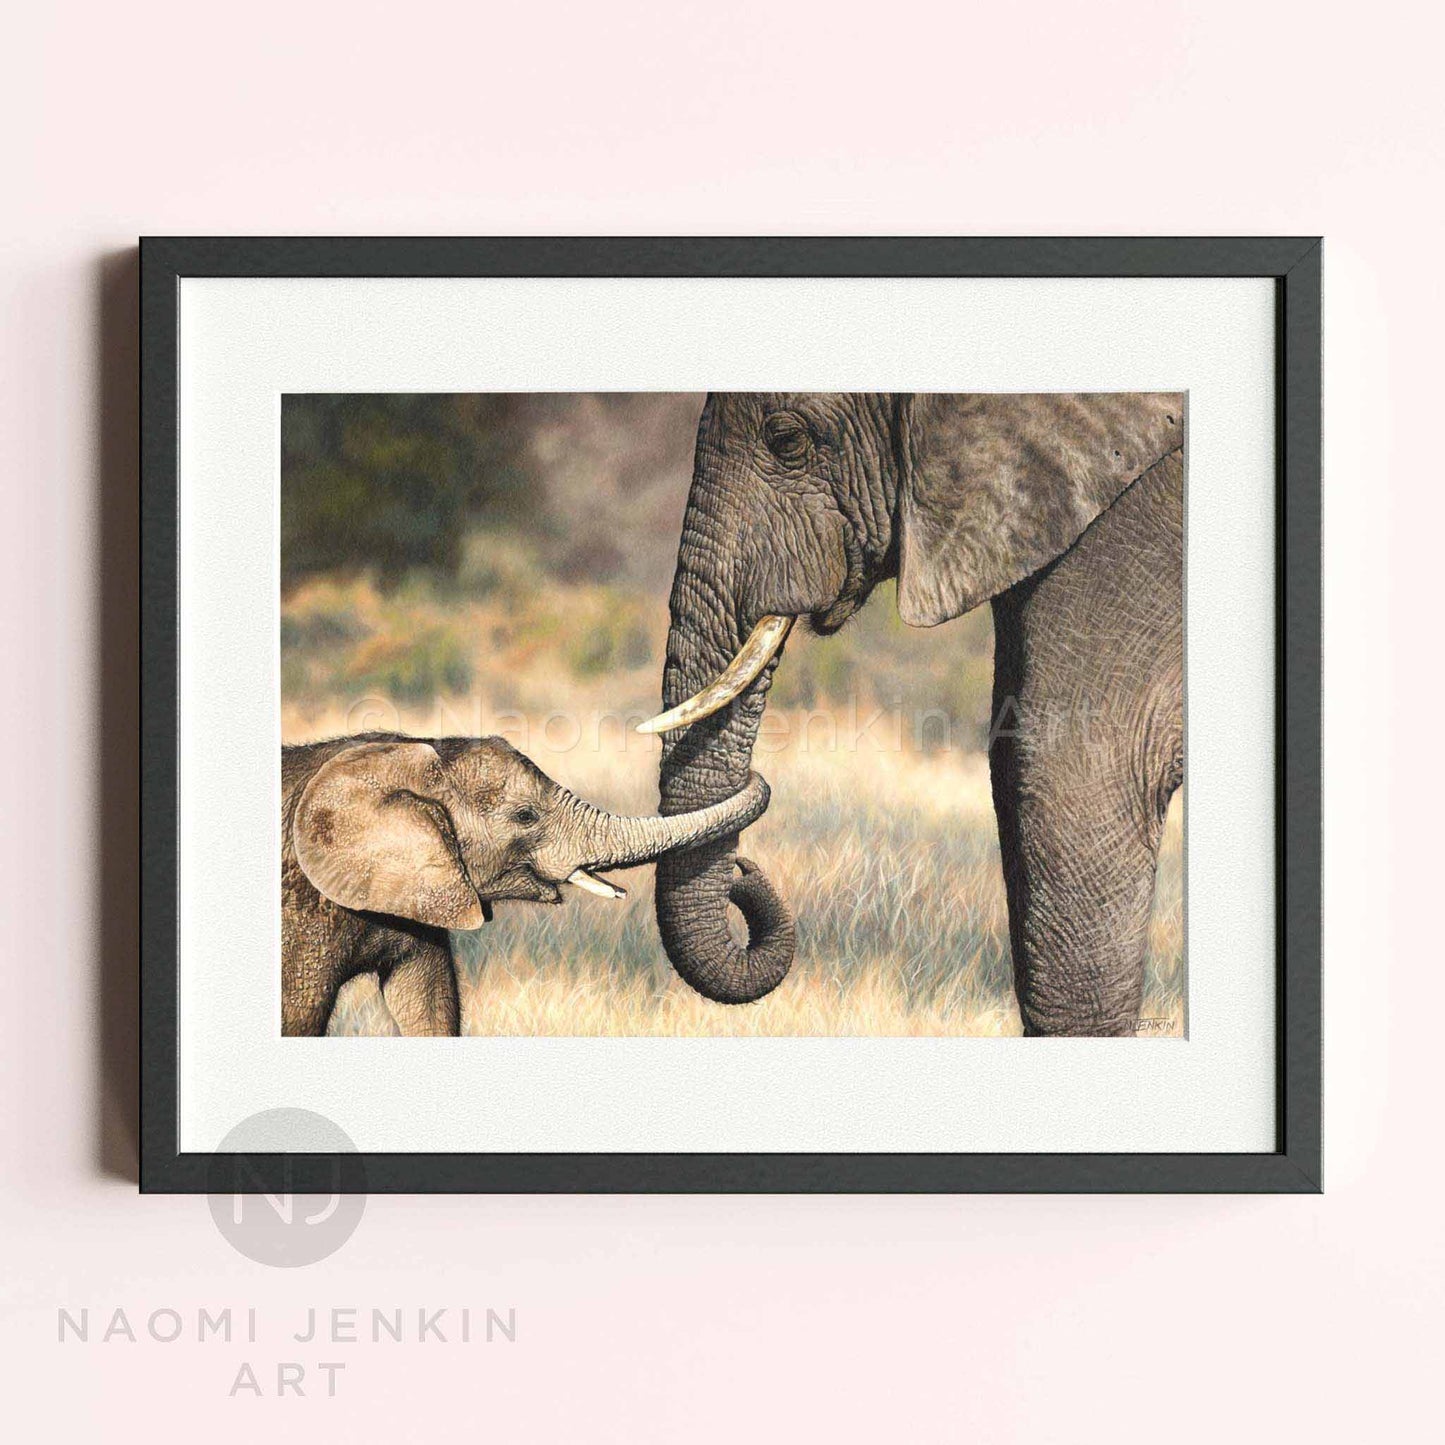 Framed elephant art by wildlife artist Naomi Jenkin